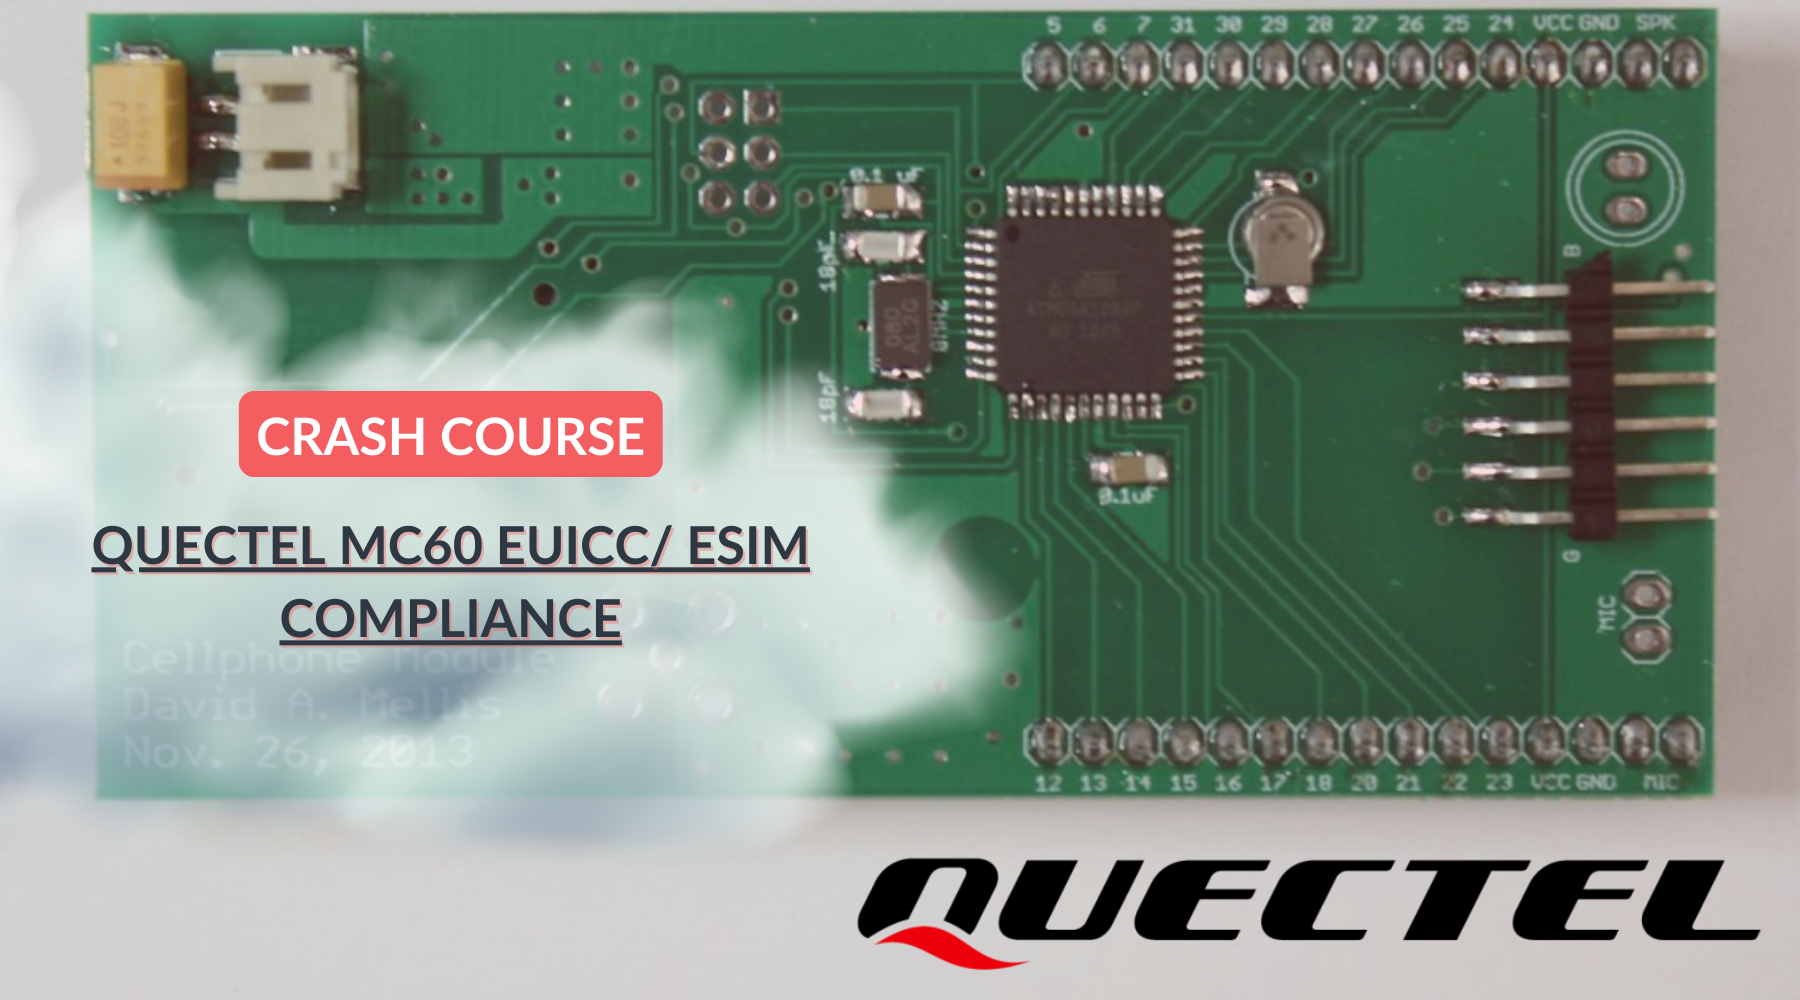 Quectel MC60 compliance with ConnectedYou eSIM